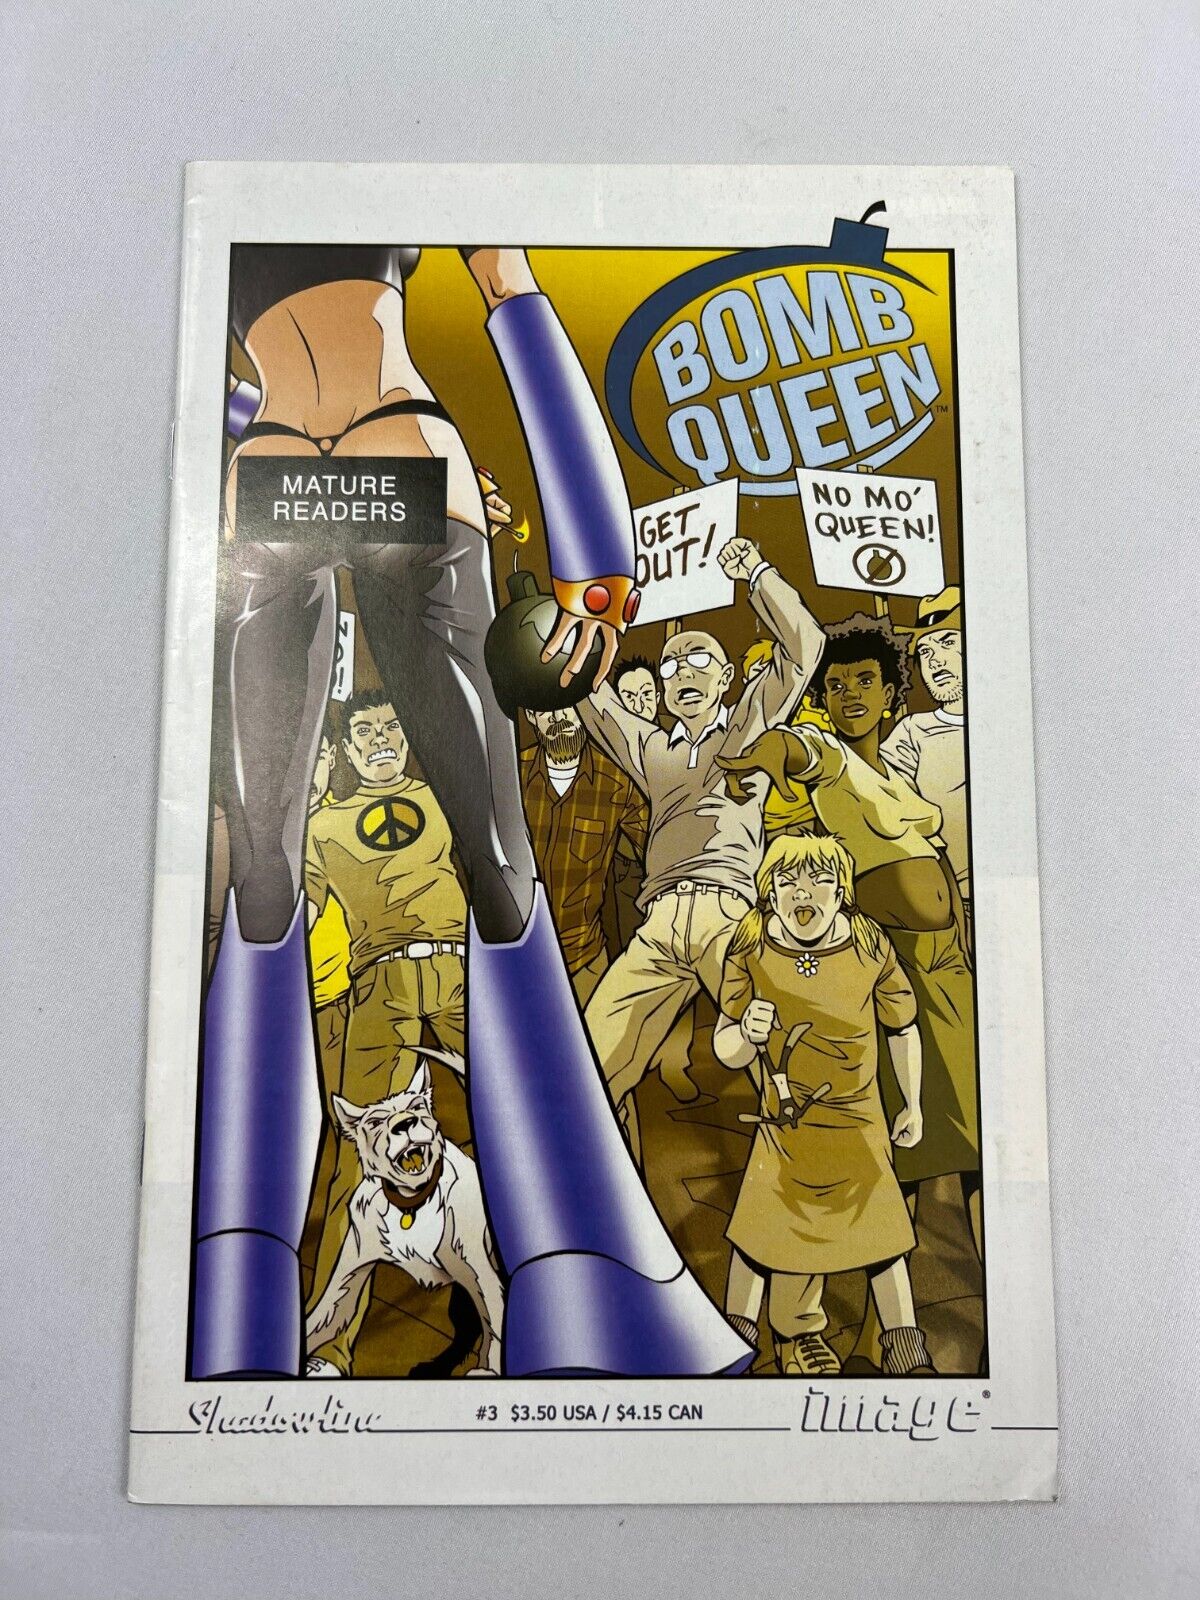 BOMB QUEEN For Mature Reader #1 - Image Comics - 2006 - Excellent Condition